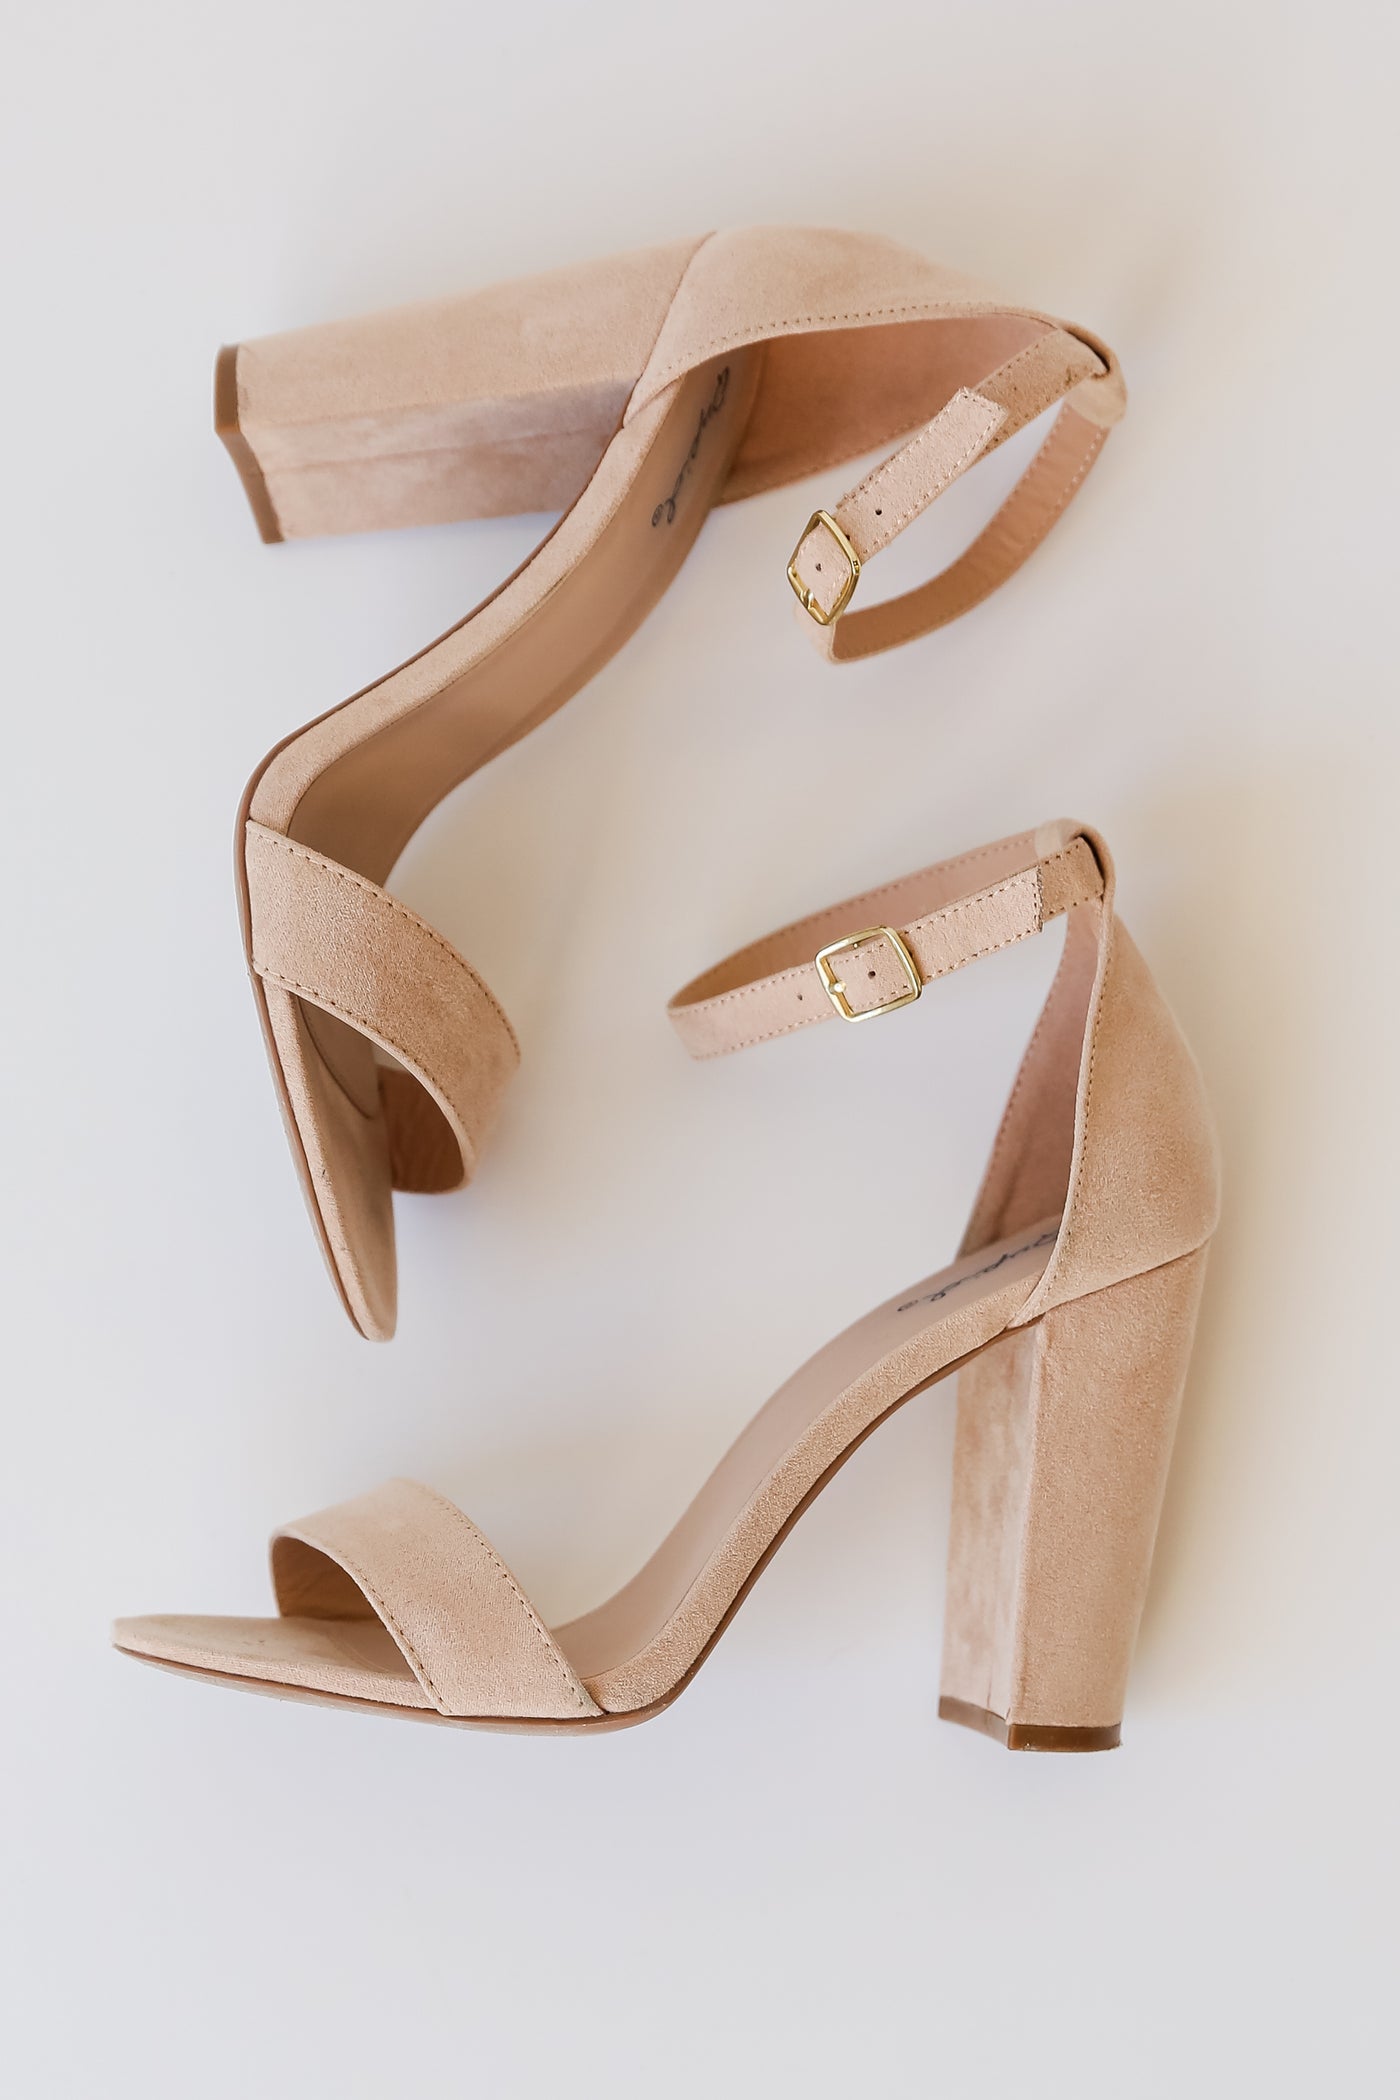 neutral tan heels